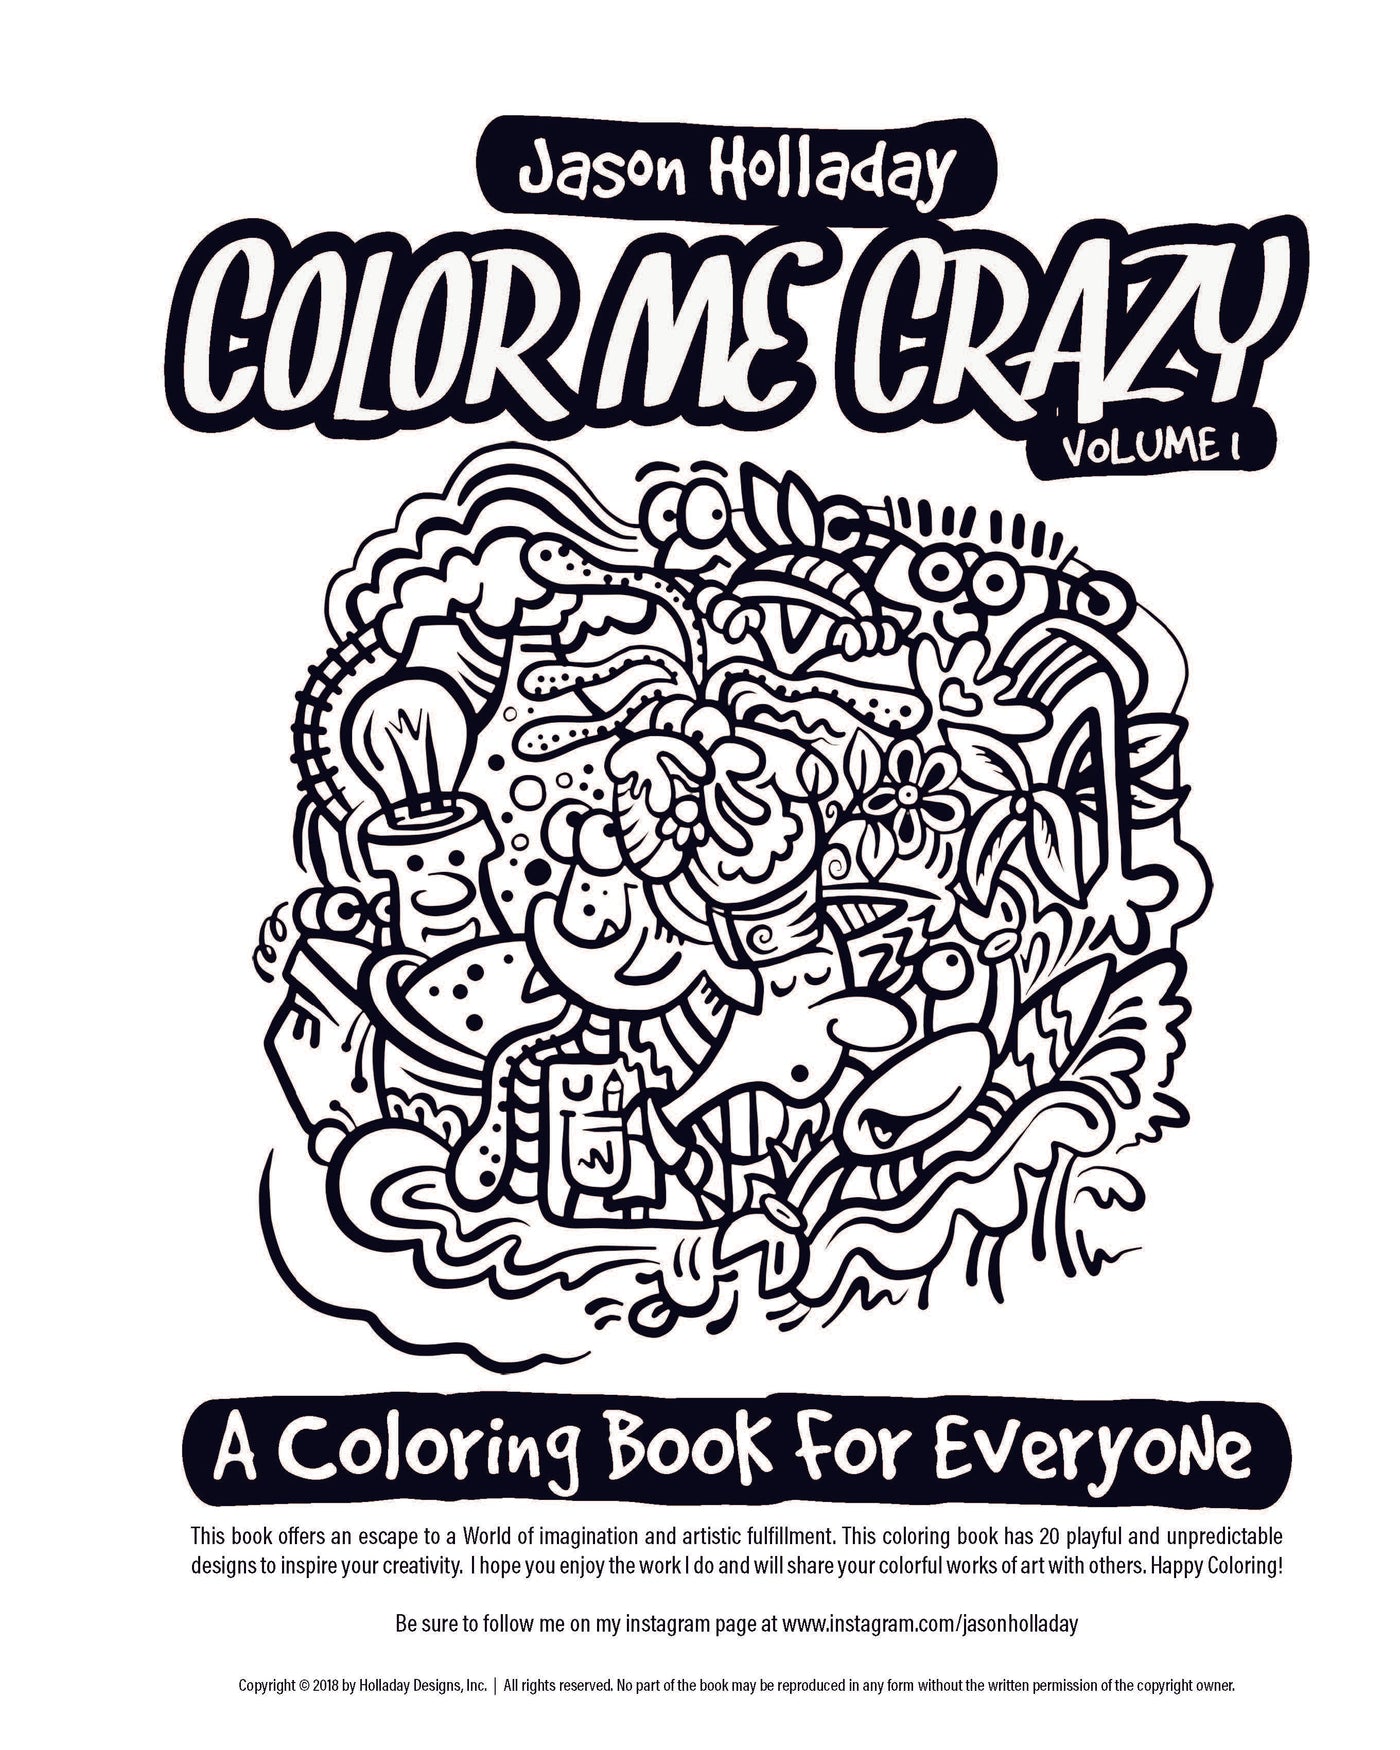 Color me crazy downloadable coloring book